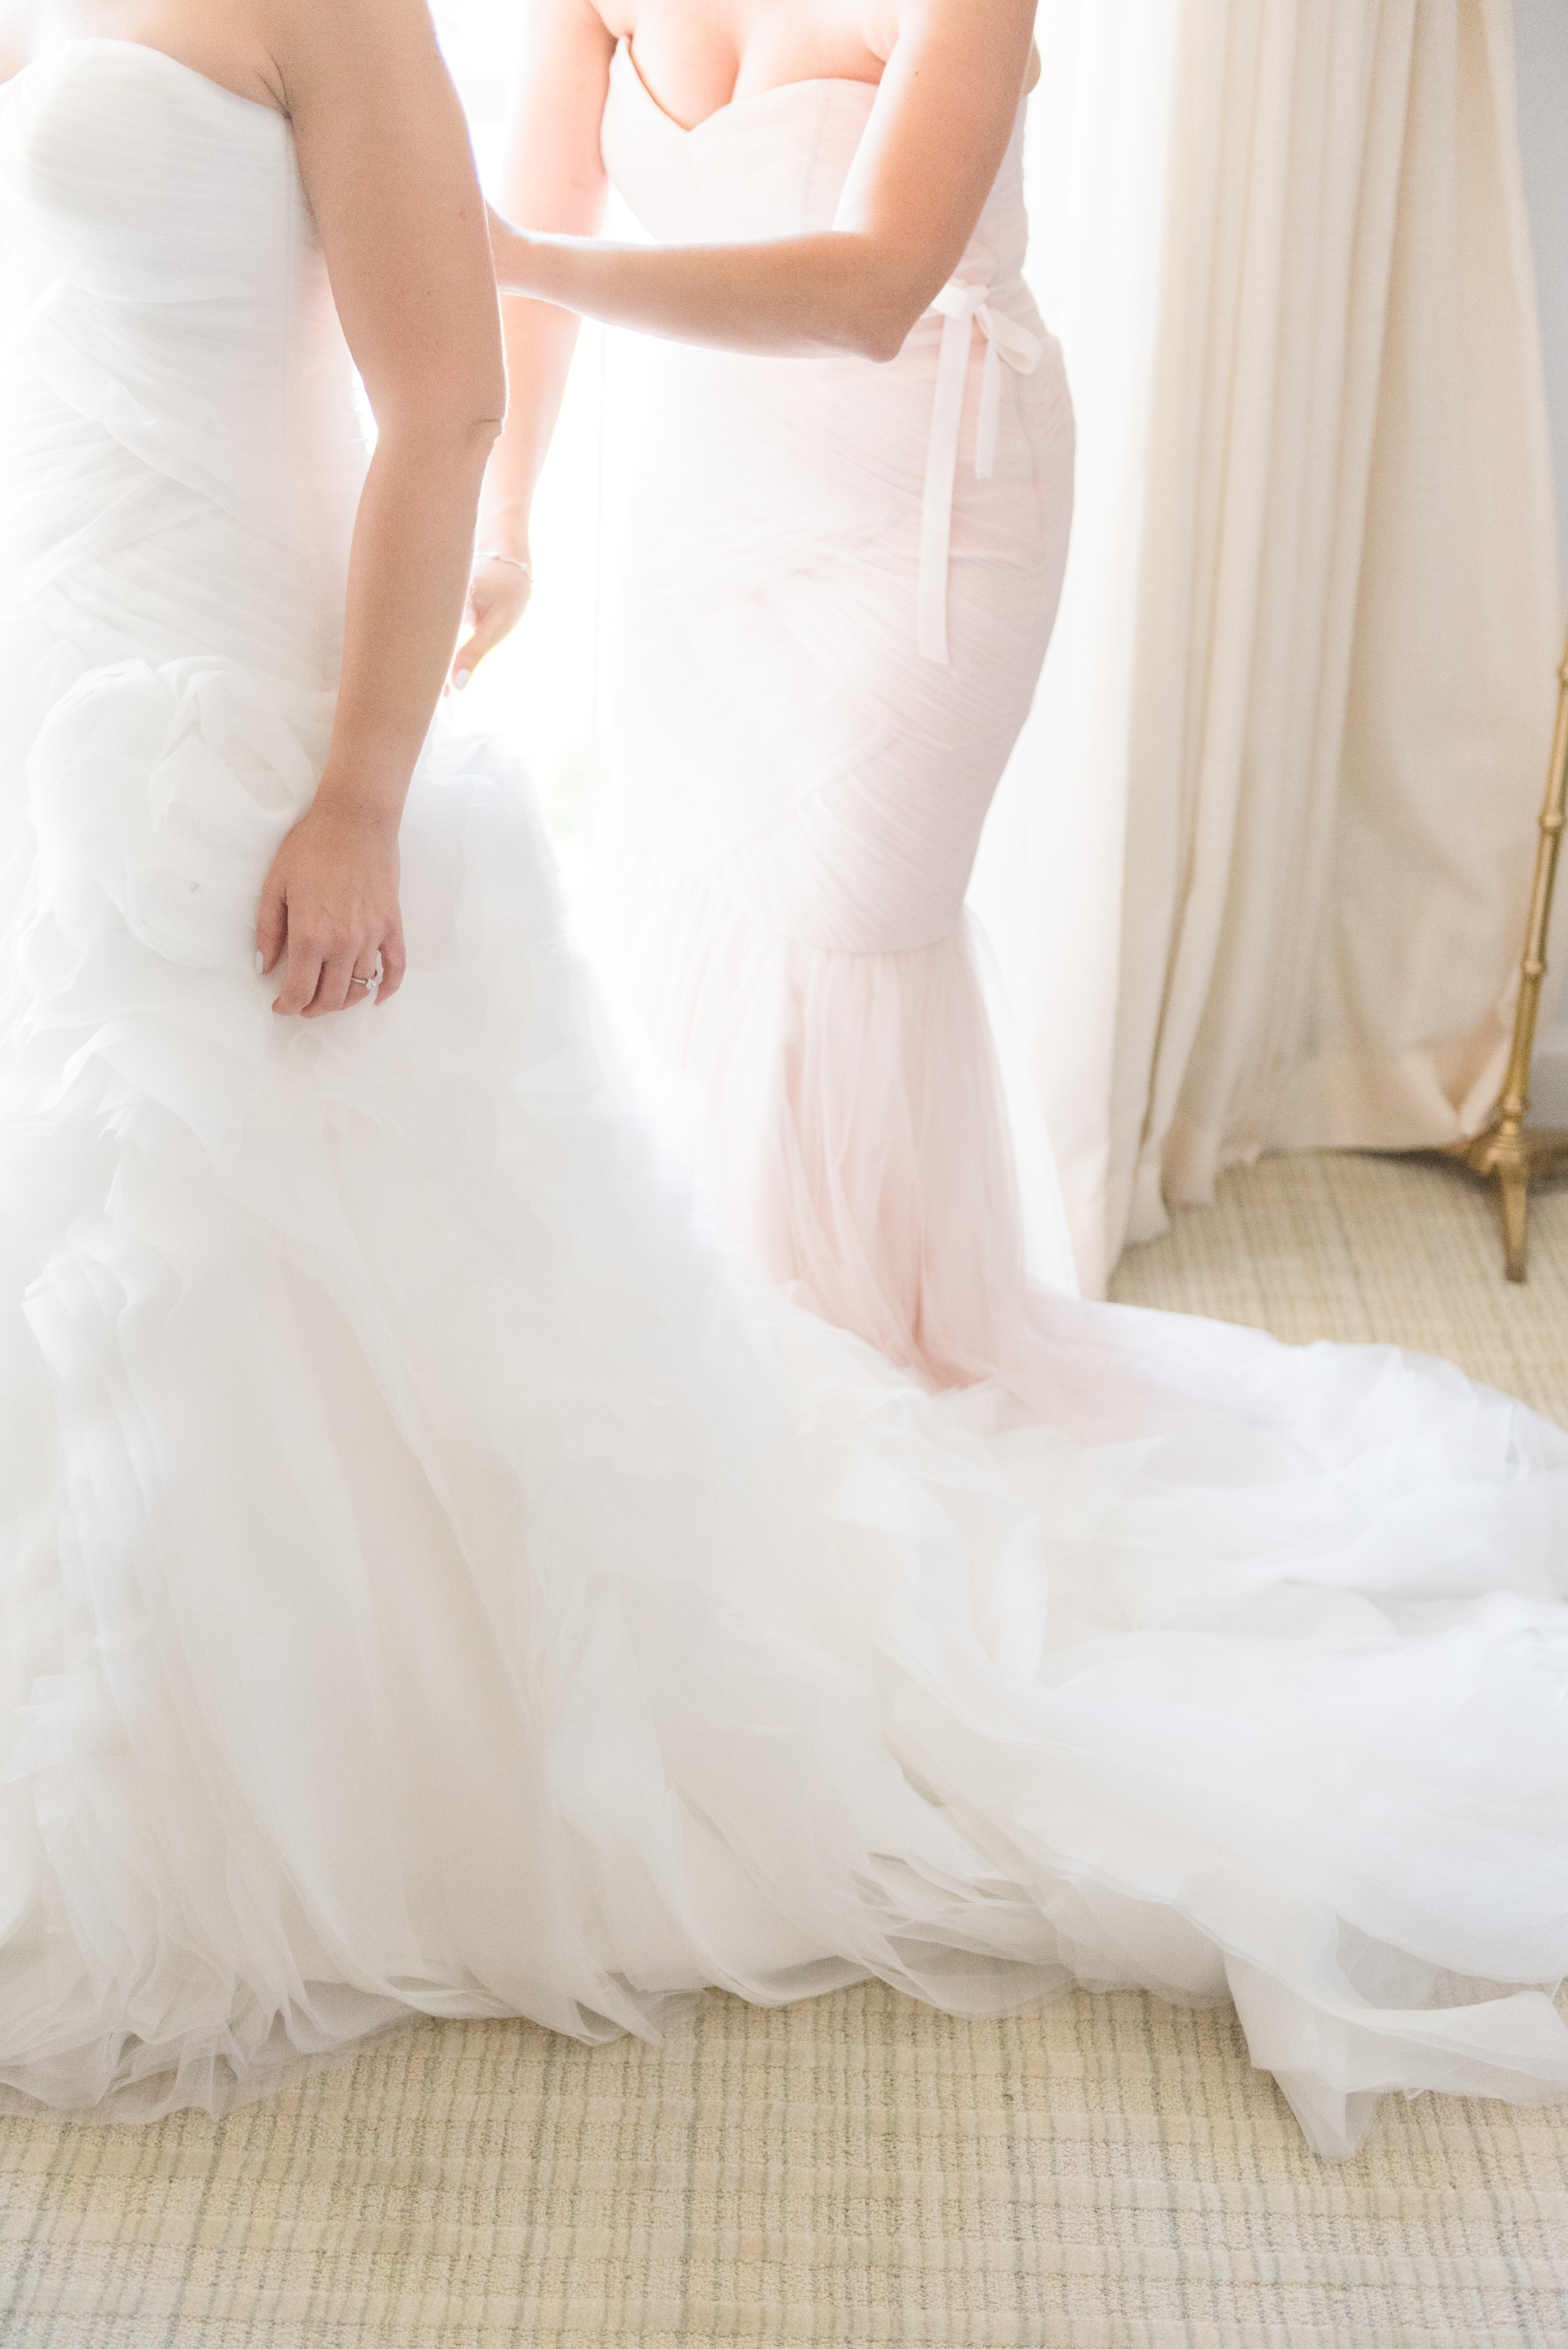 Gorgeous Wedding Dresses - Flagler Museum Palm Beach Wedding Venue - The Overwhelmed Bride Wedding Blog